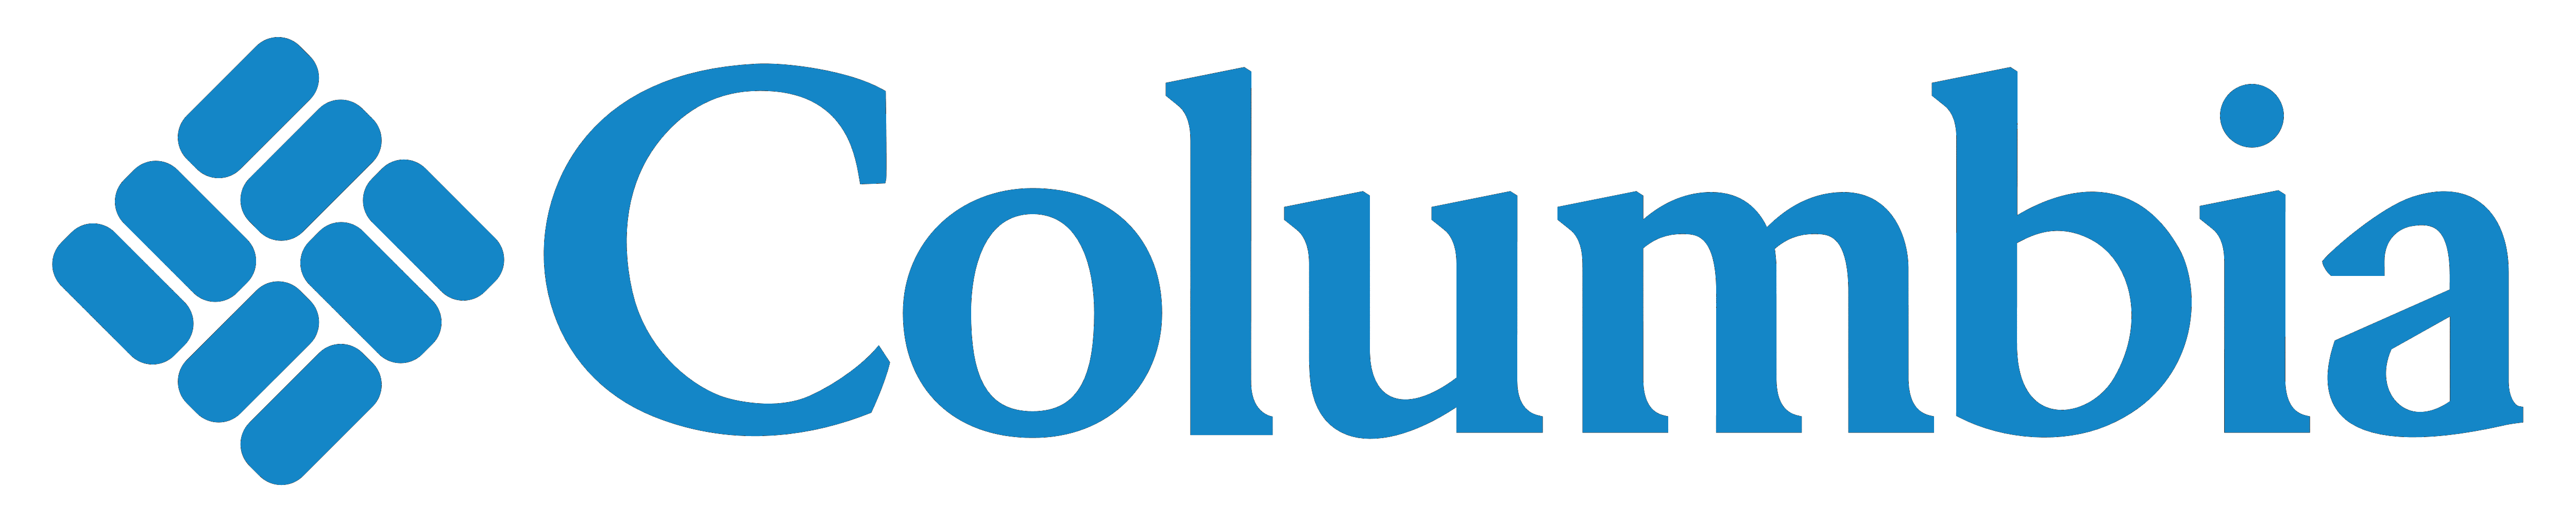 columbia-logo-1